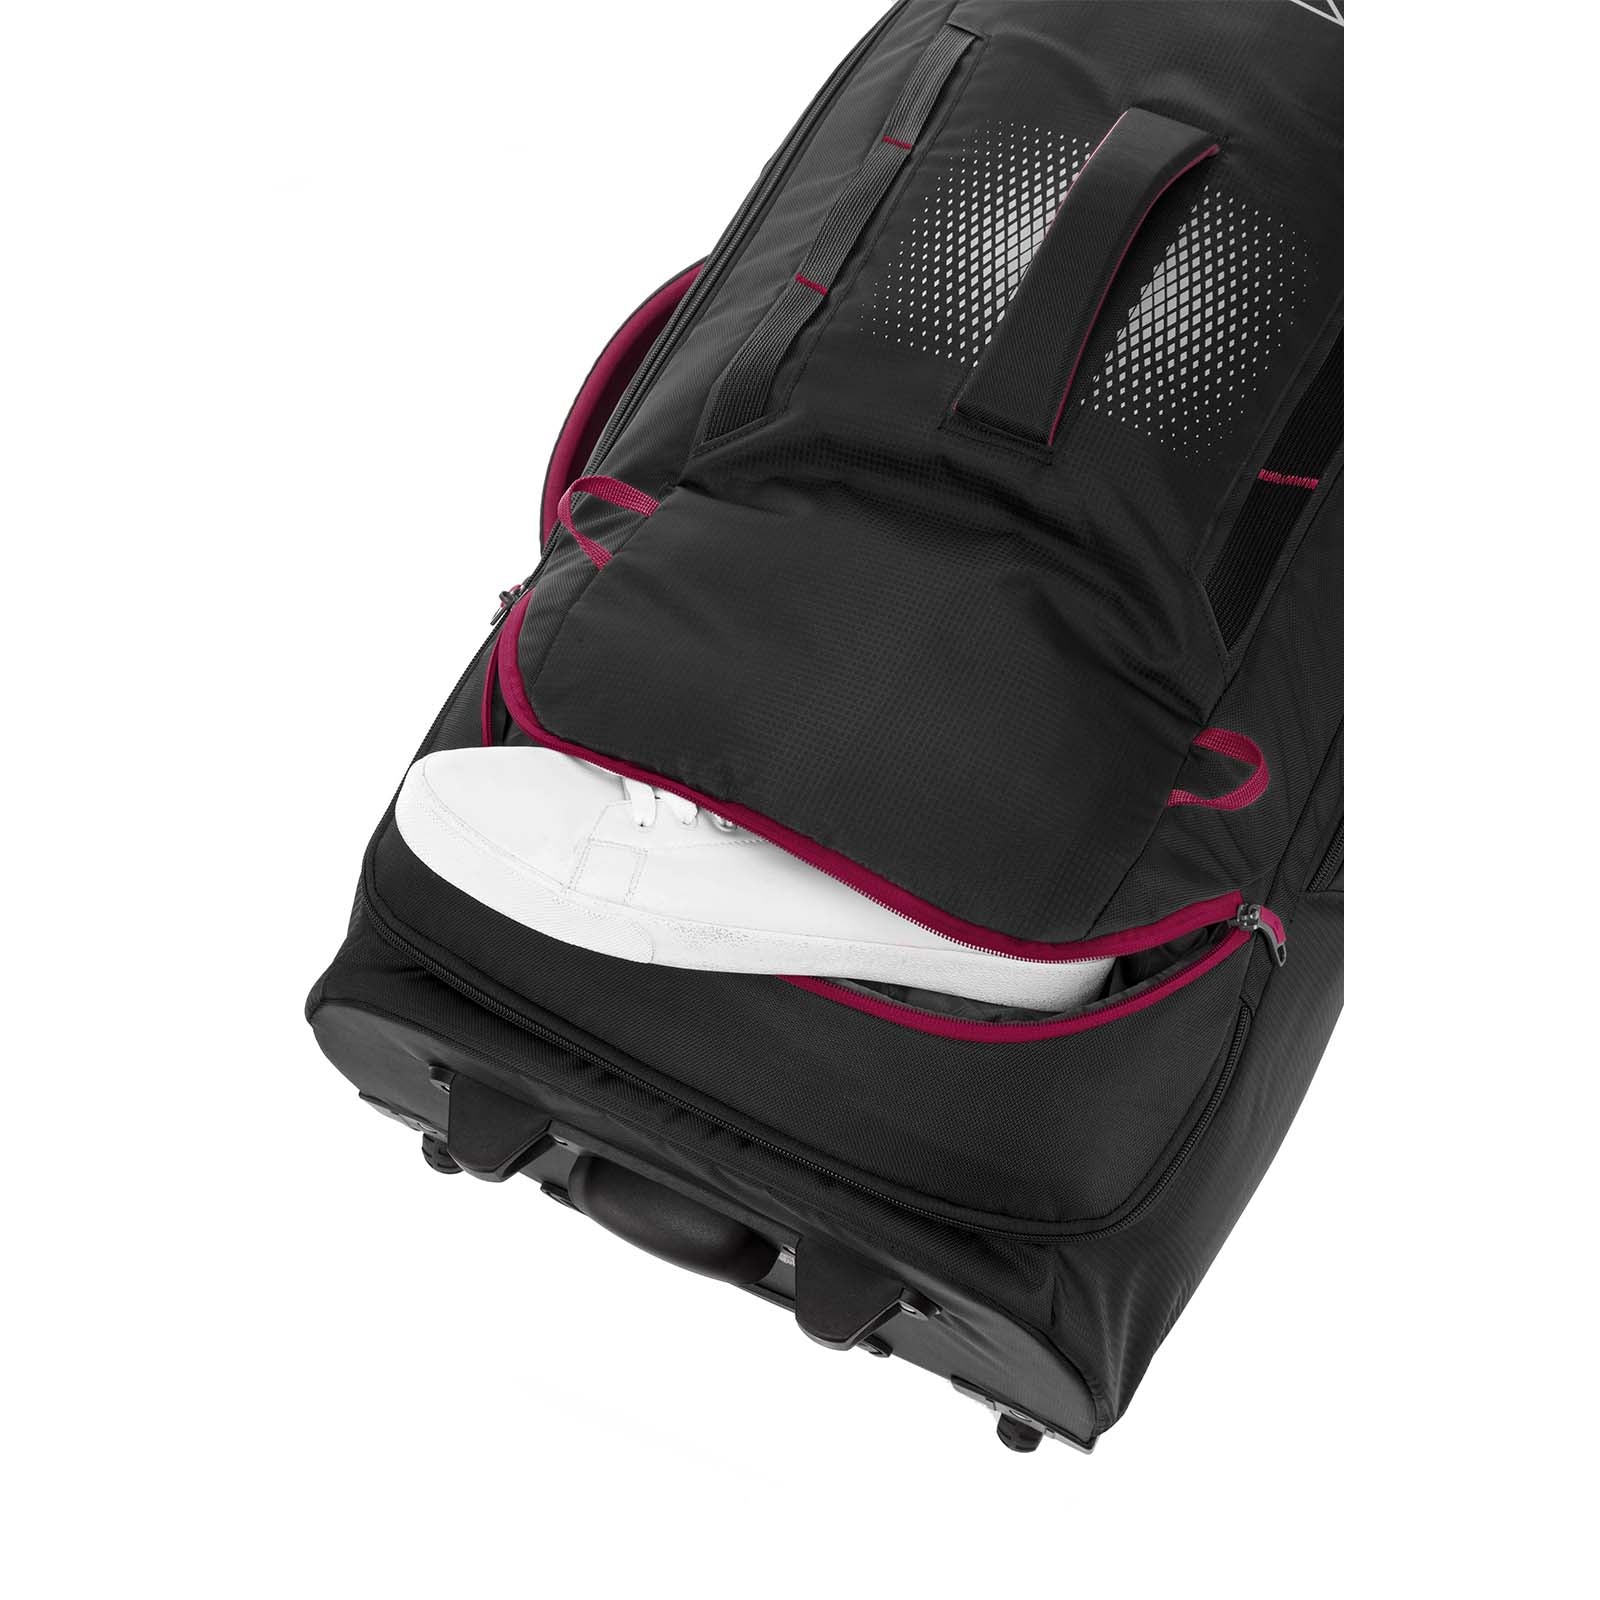     High_Sierra_Composite_V4_84cm_Carry-On_Wheeled_Duffel_Black_Red_Shoe_Bag